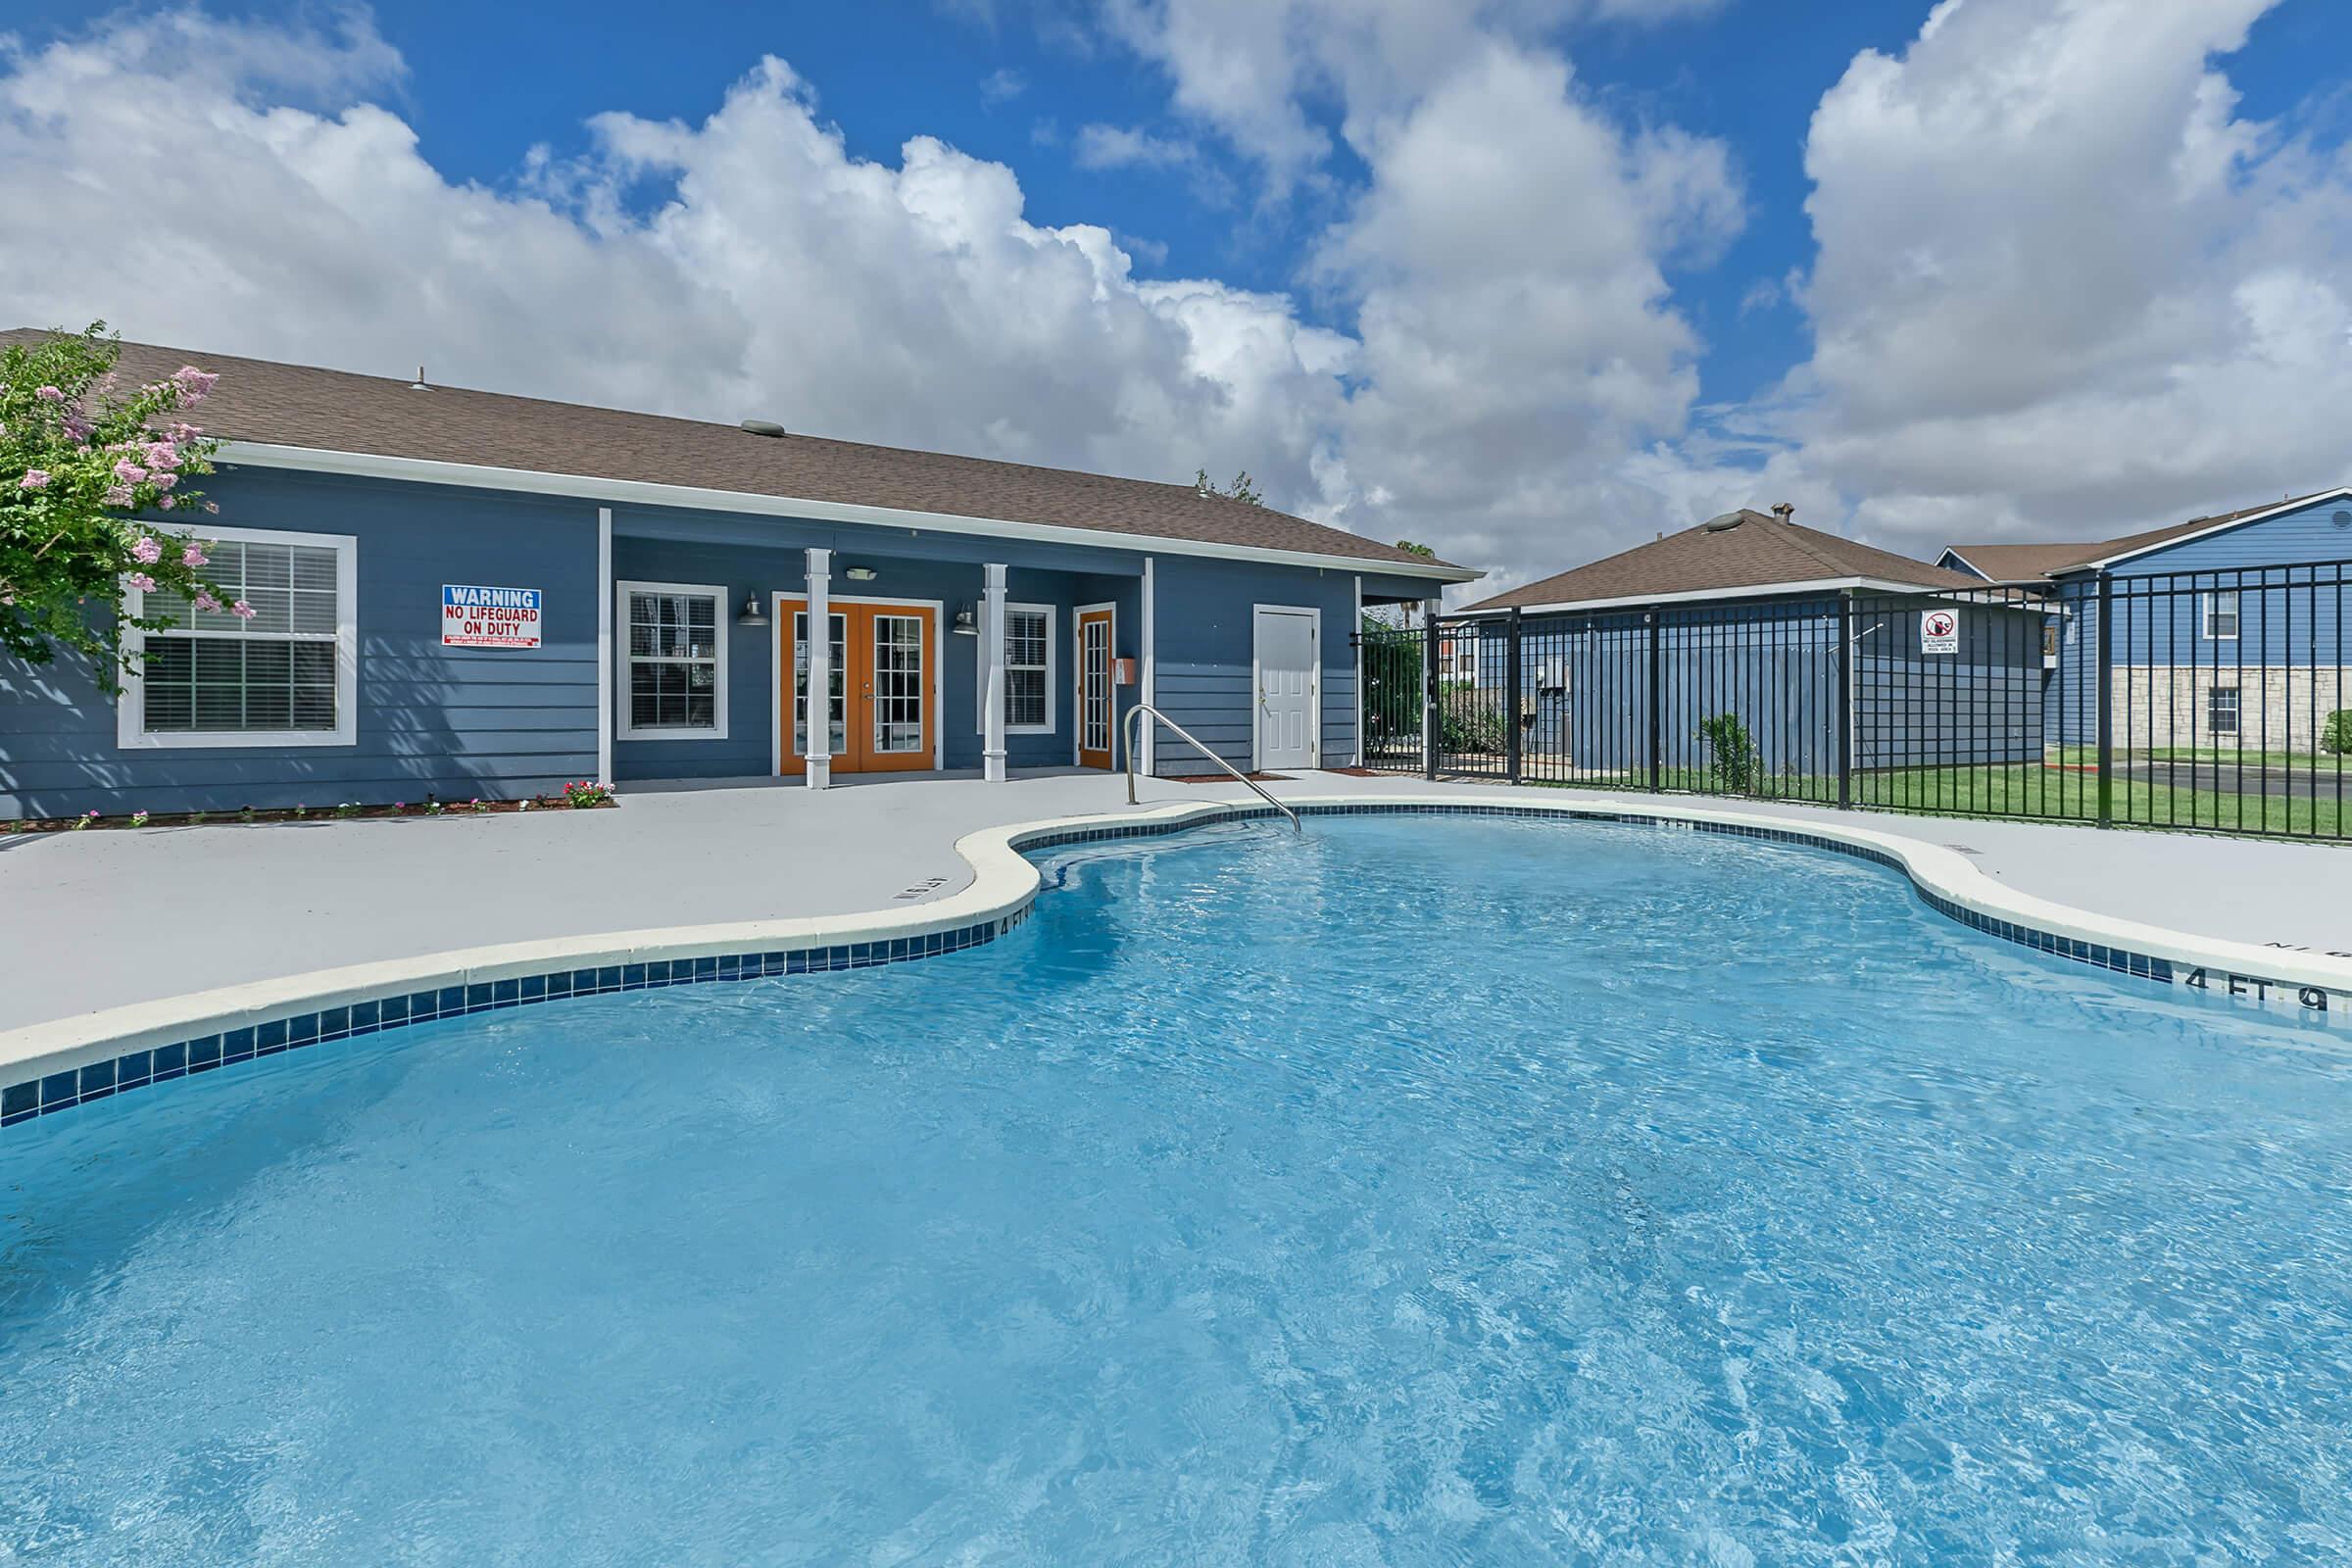 Pool area just outside office with sun deck Portside Villas Apts Ingleside, TX  78362